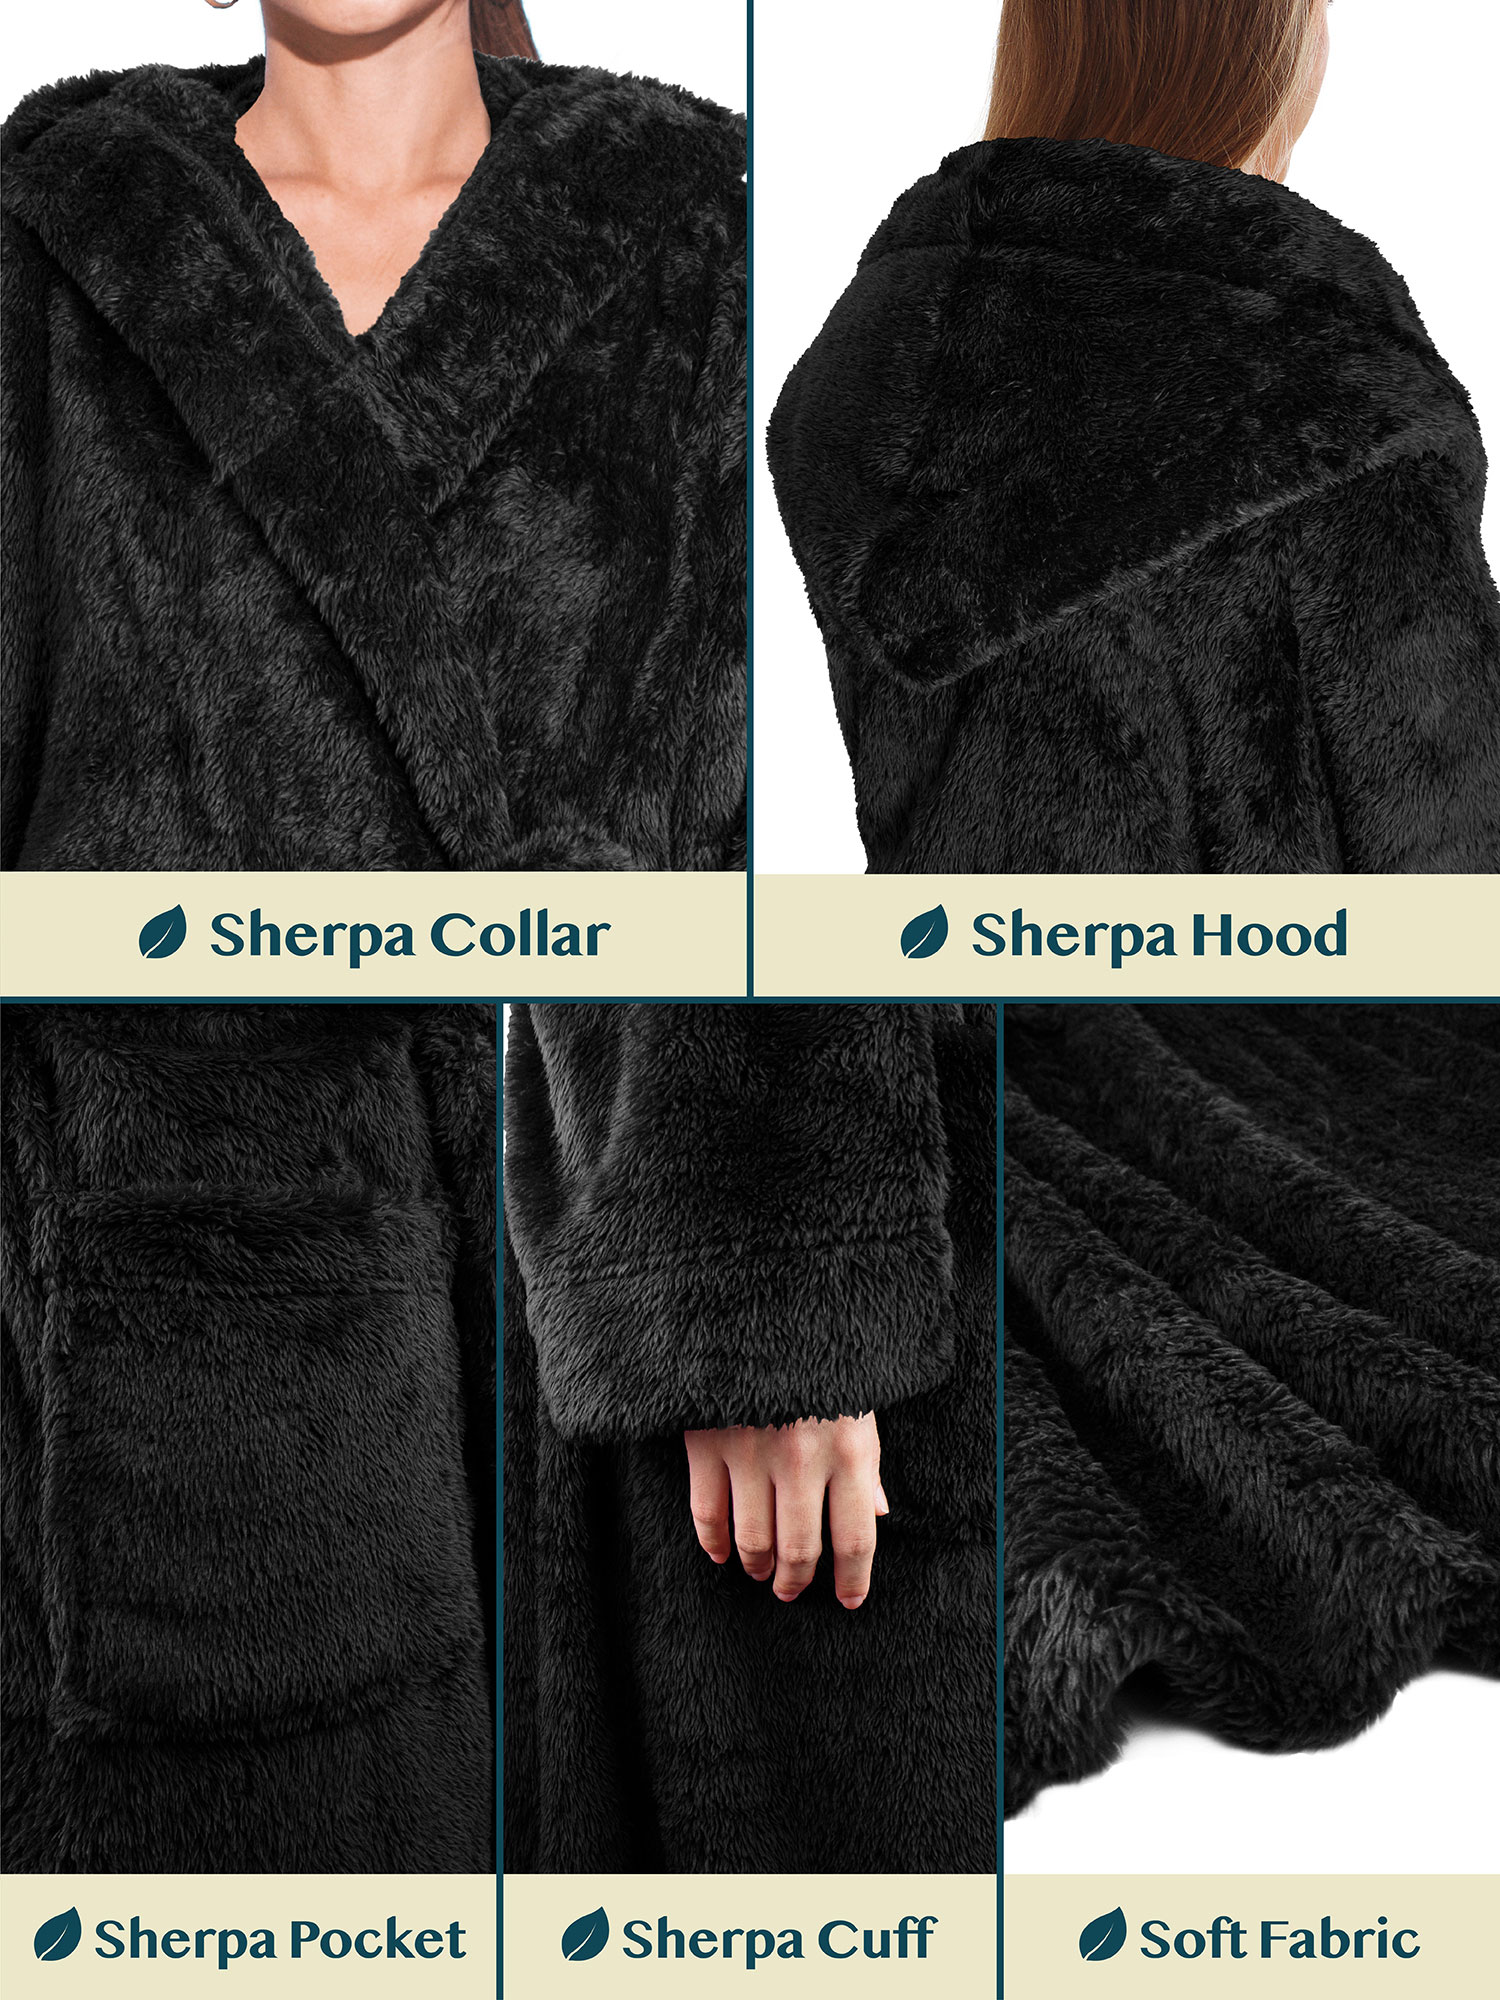 PAVILIA Women Hooded Plush Soft Robe | Fluffy Warm Fleece Sherpa Shaggy Bathrobe (L/XL, Black) - image 4 of 7